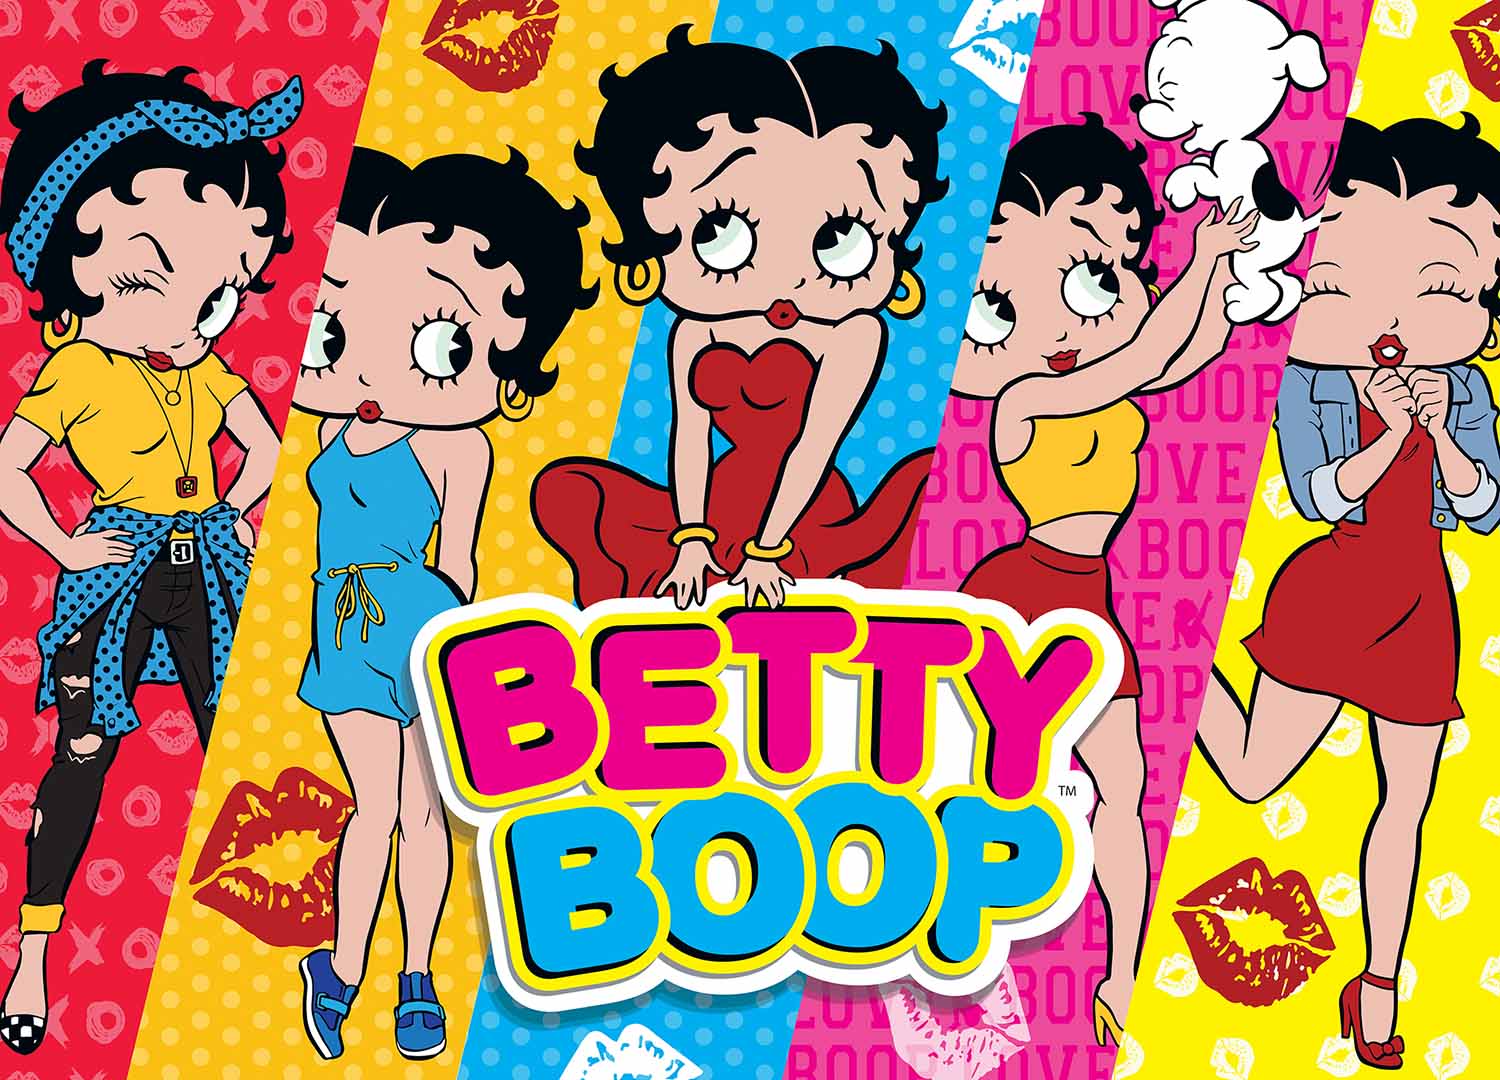 Betty Boop Strikes a Pose Pop Culture Cartoon Jigsaw Puzzle